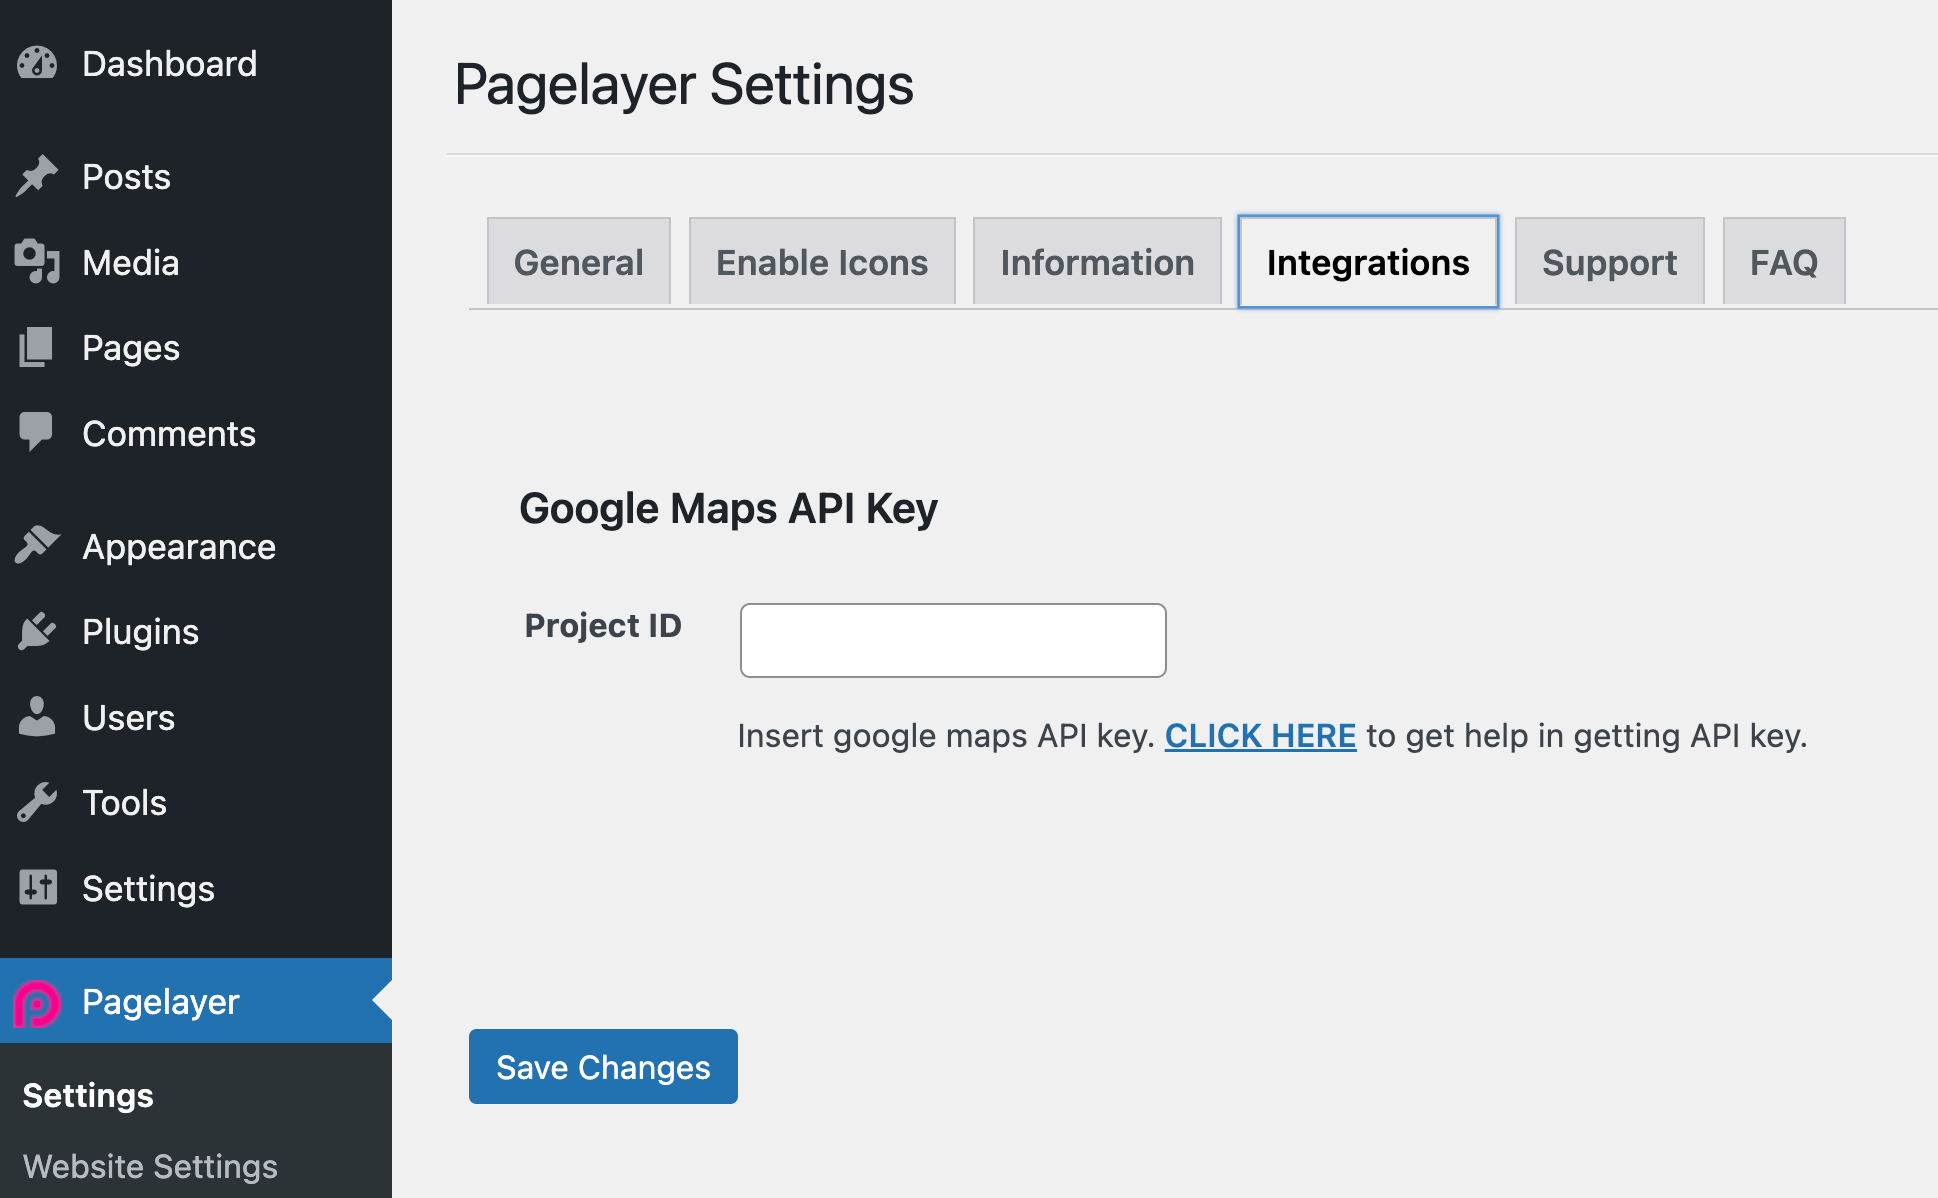 Pagelayer integrations.